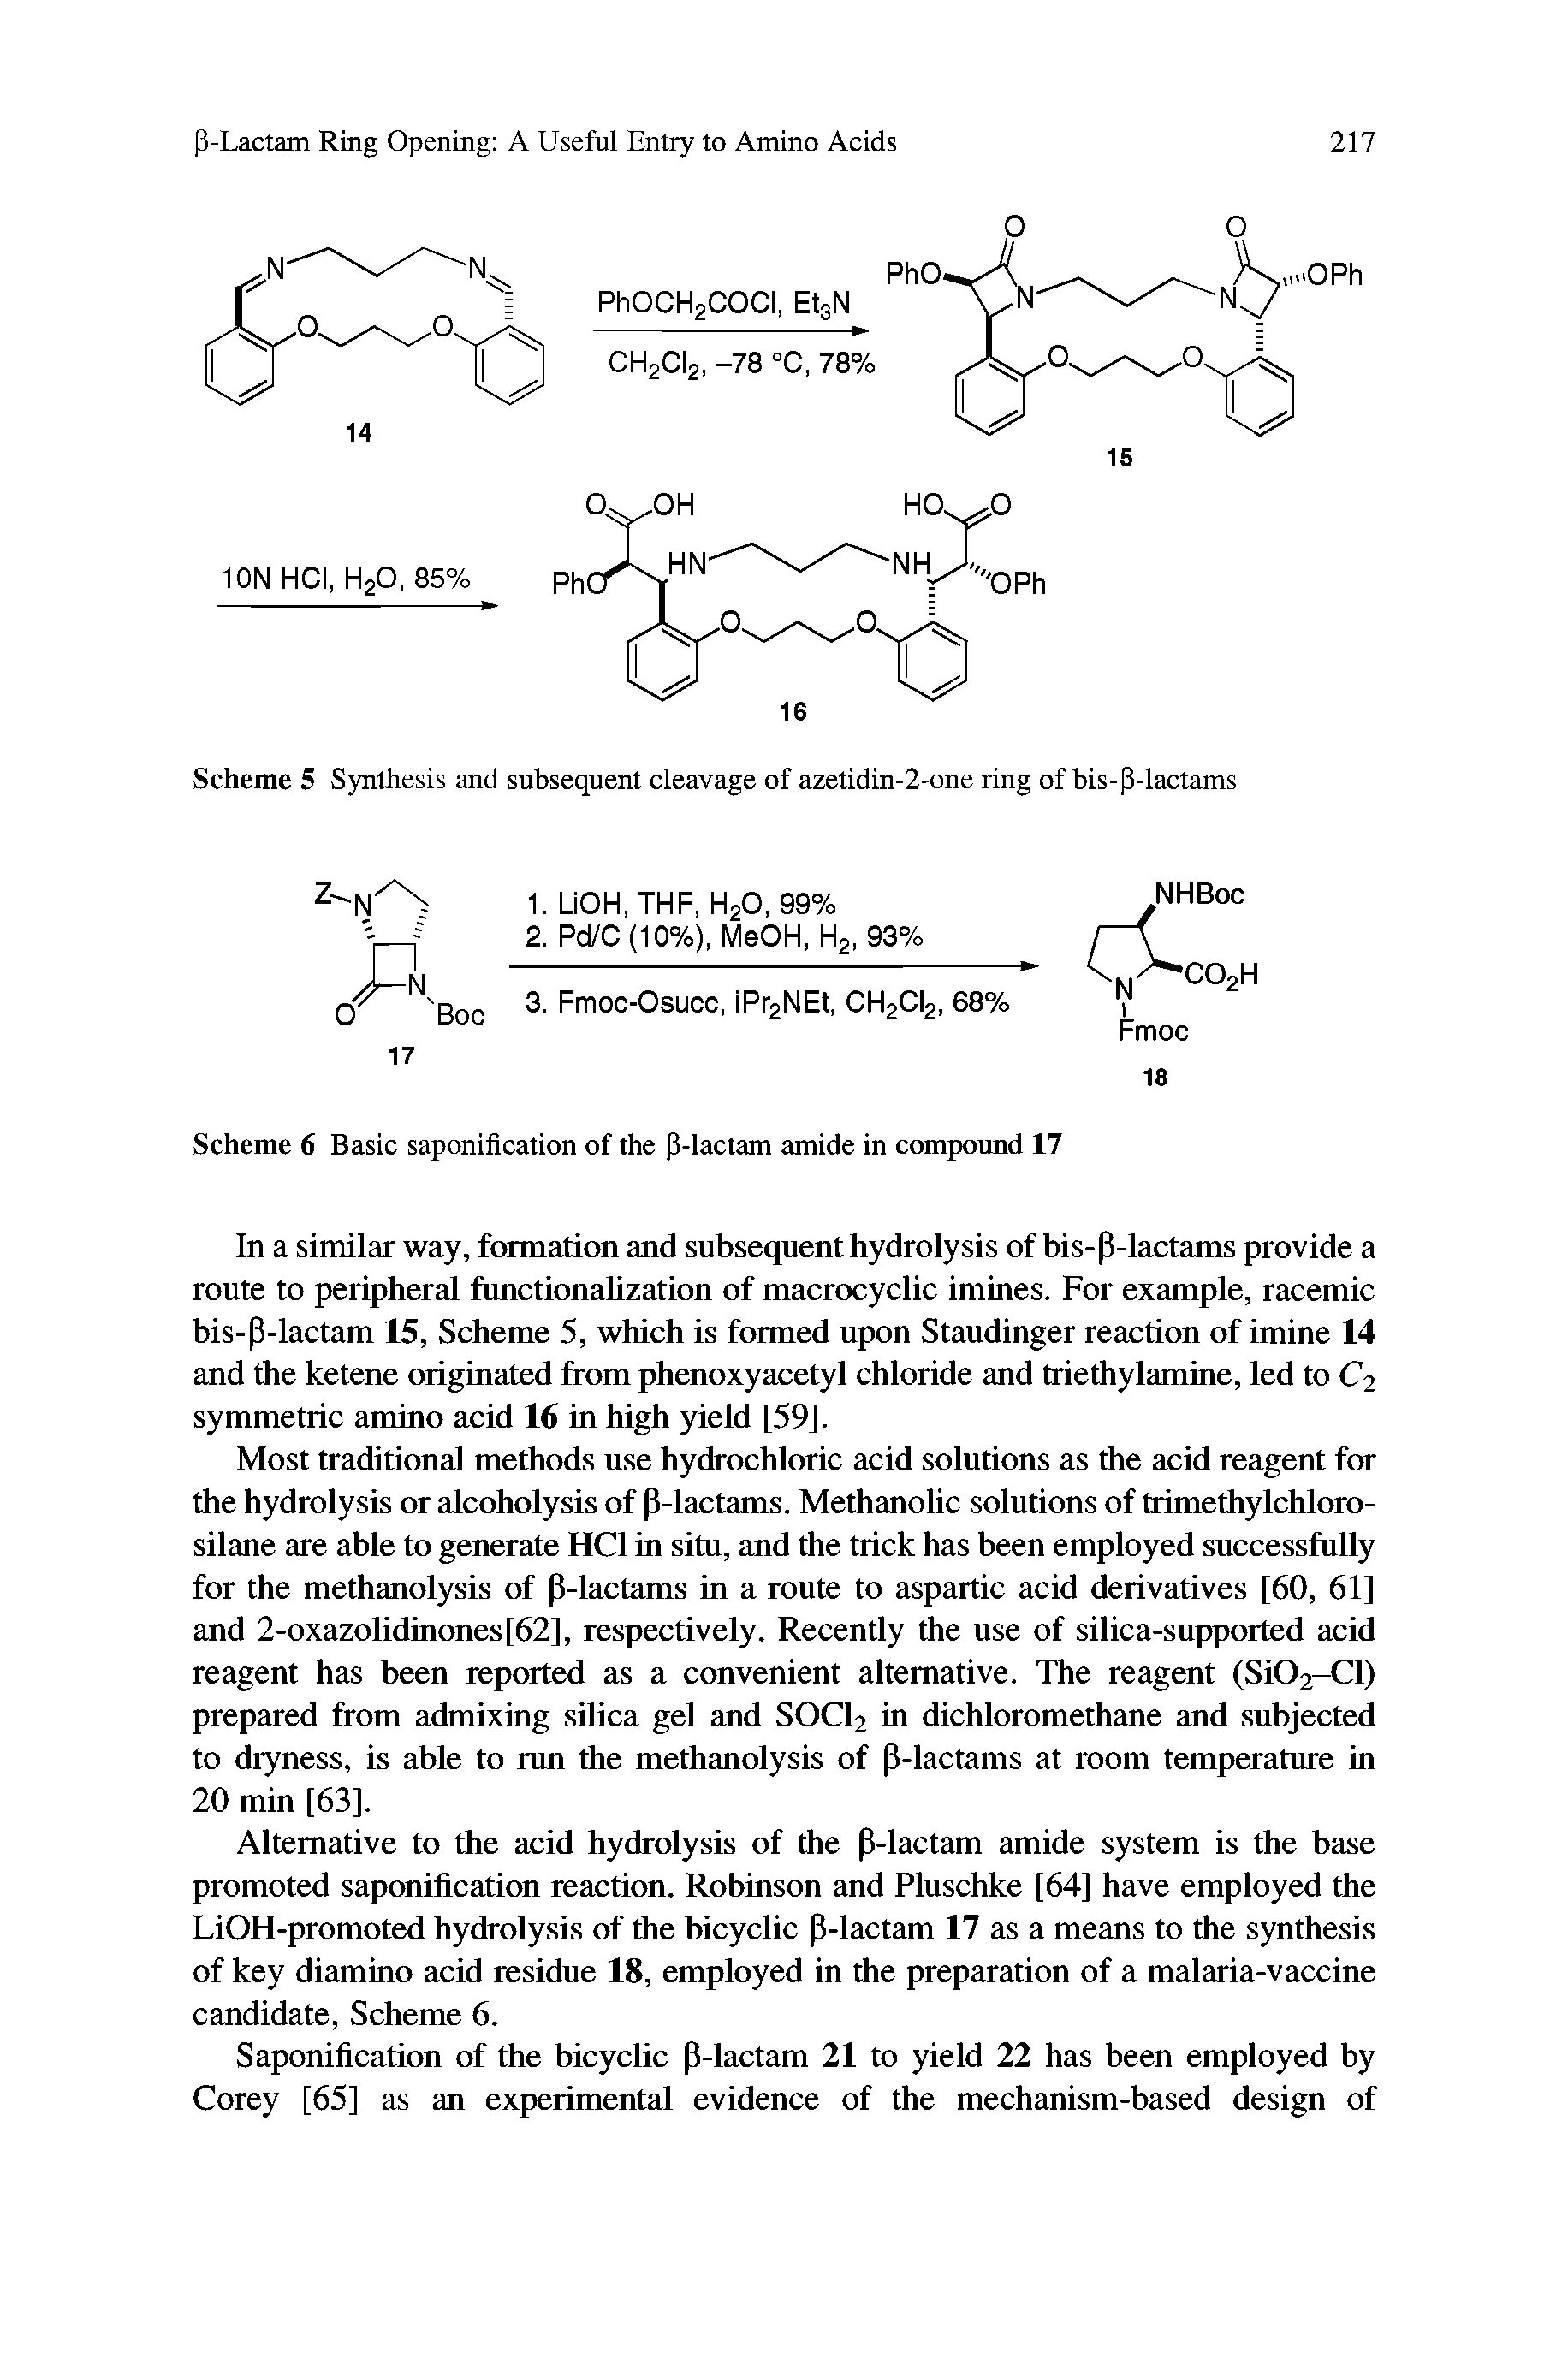 Scheme 6 Basic saponification of the P-lactam amide in compound 17...